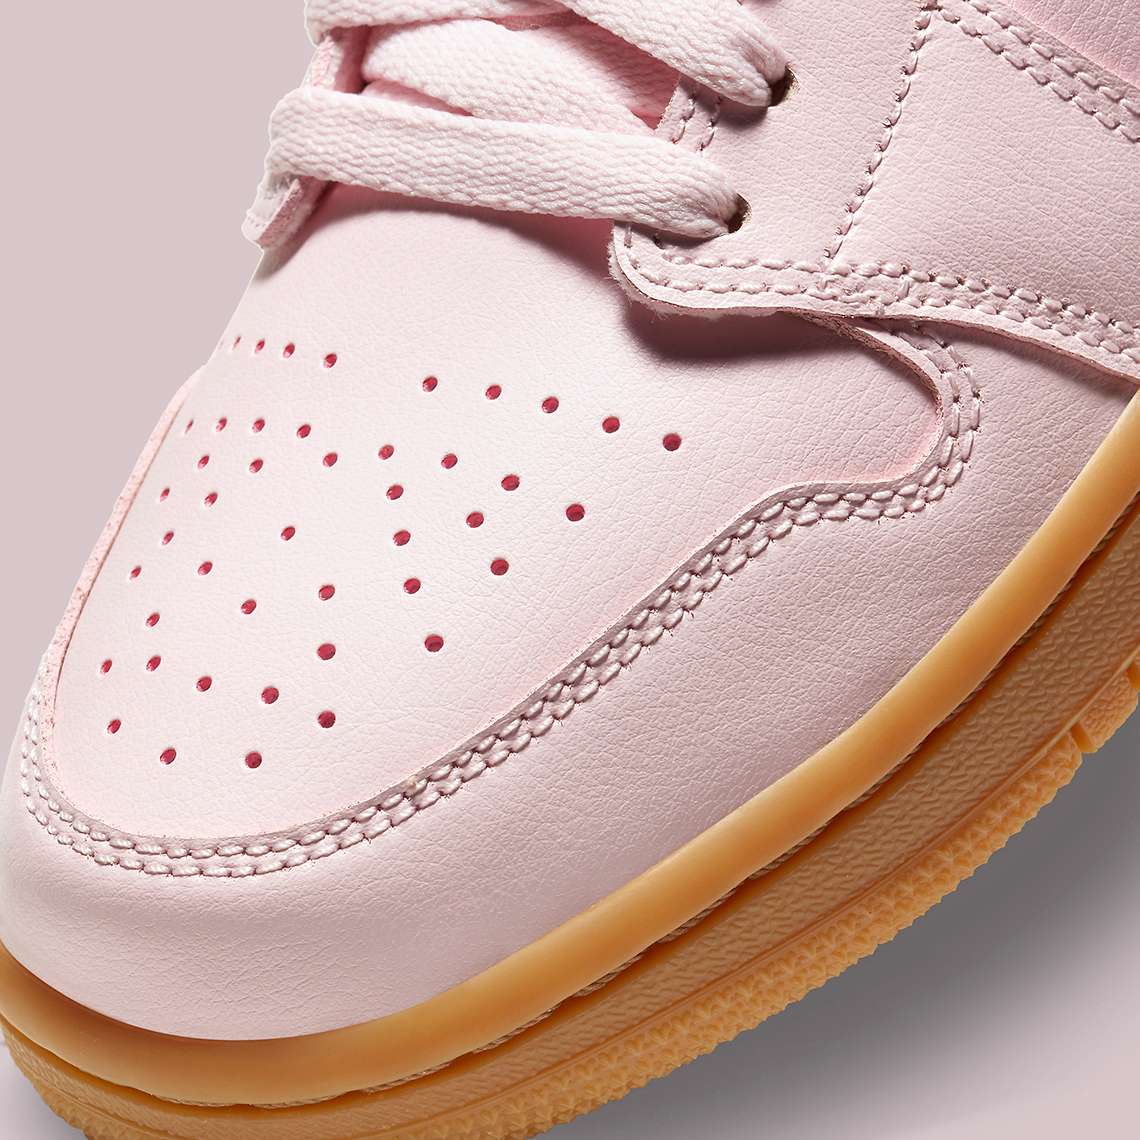 Air Jordan WMNS Arctic Pink Gum Light Brown DC0774-601 | SneakerNews.com